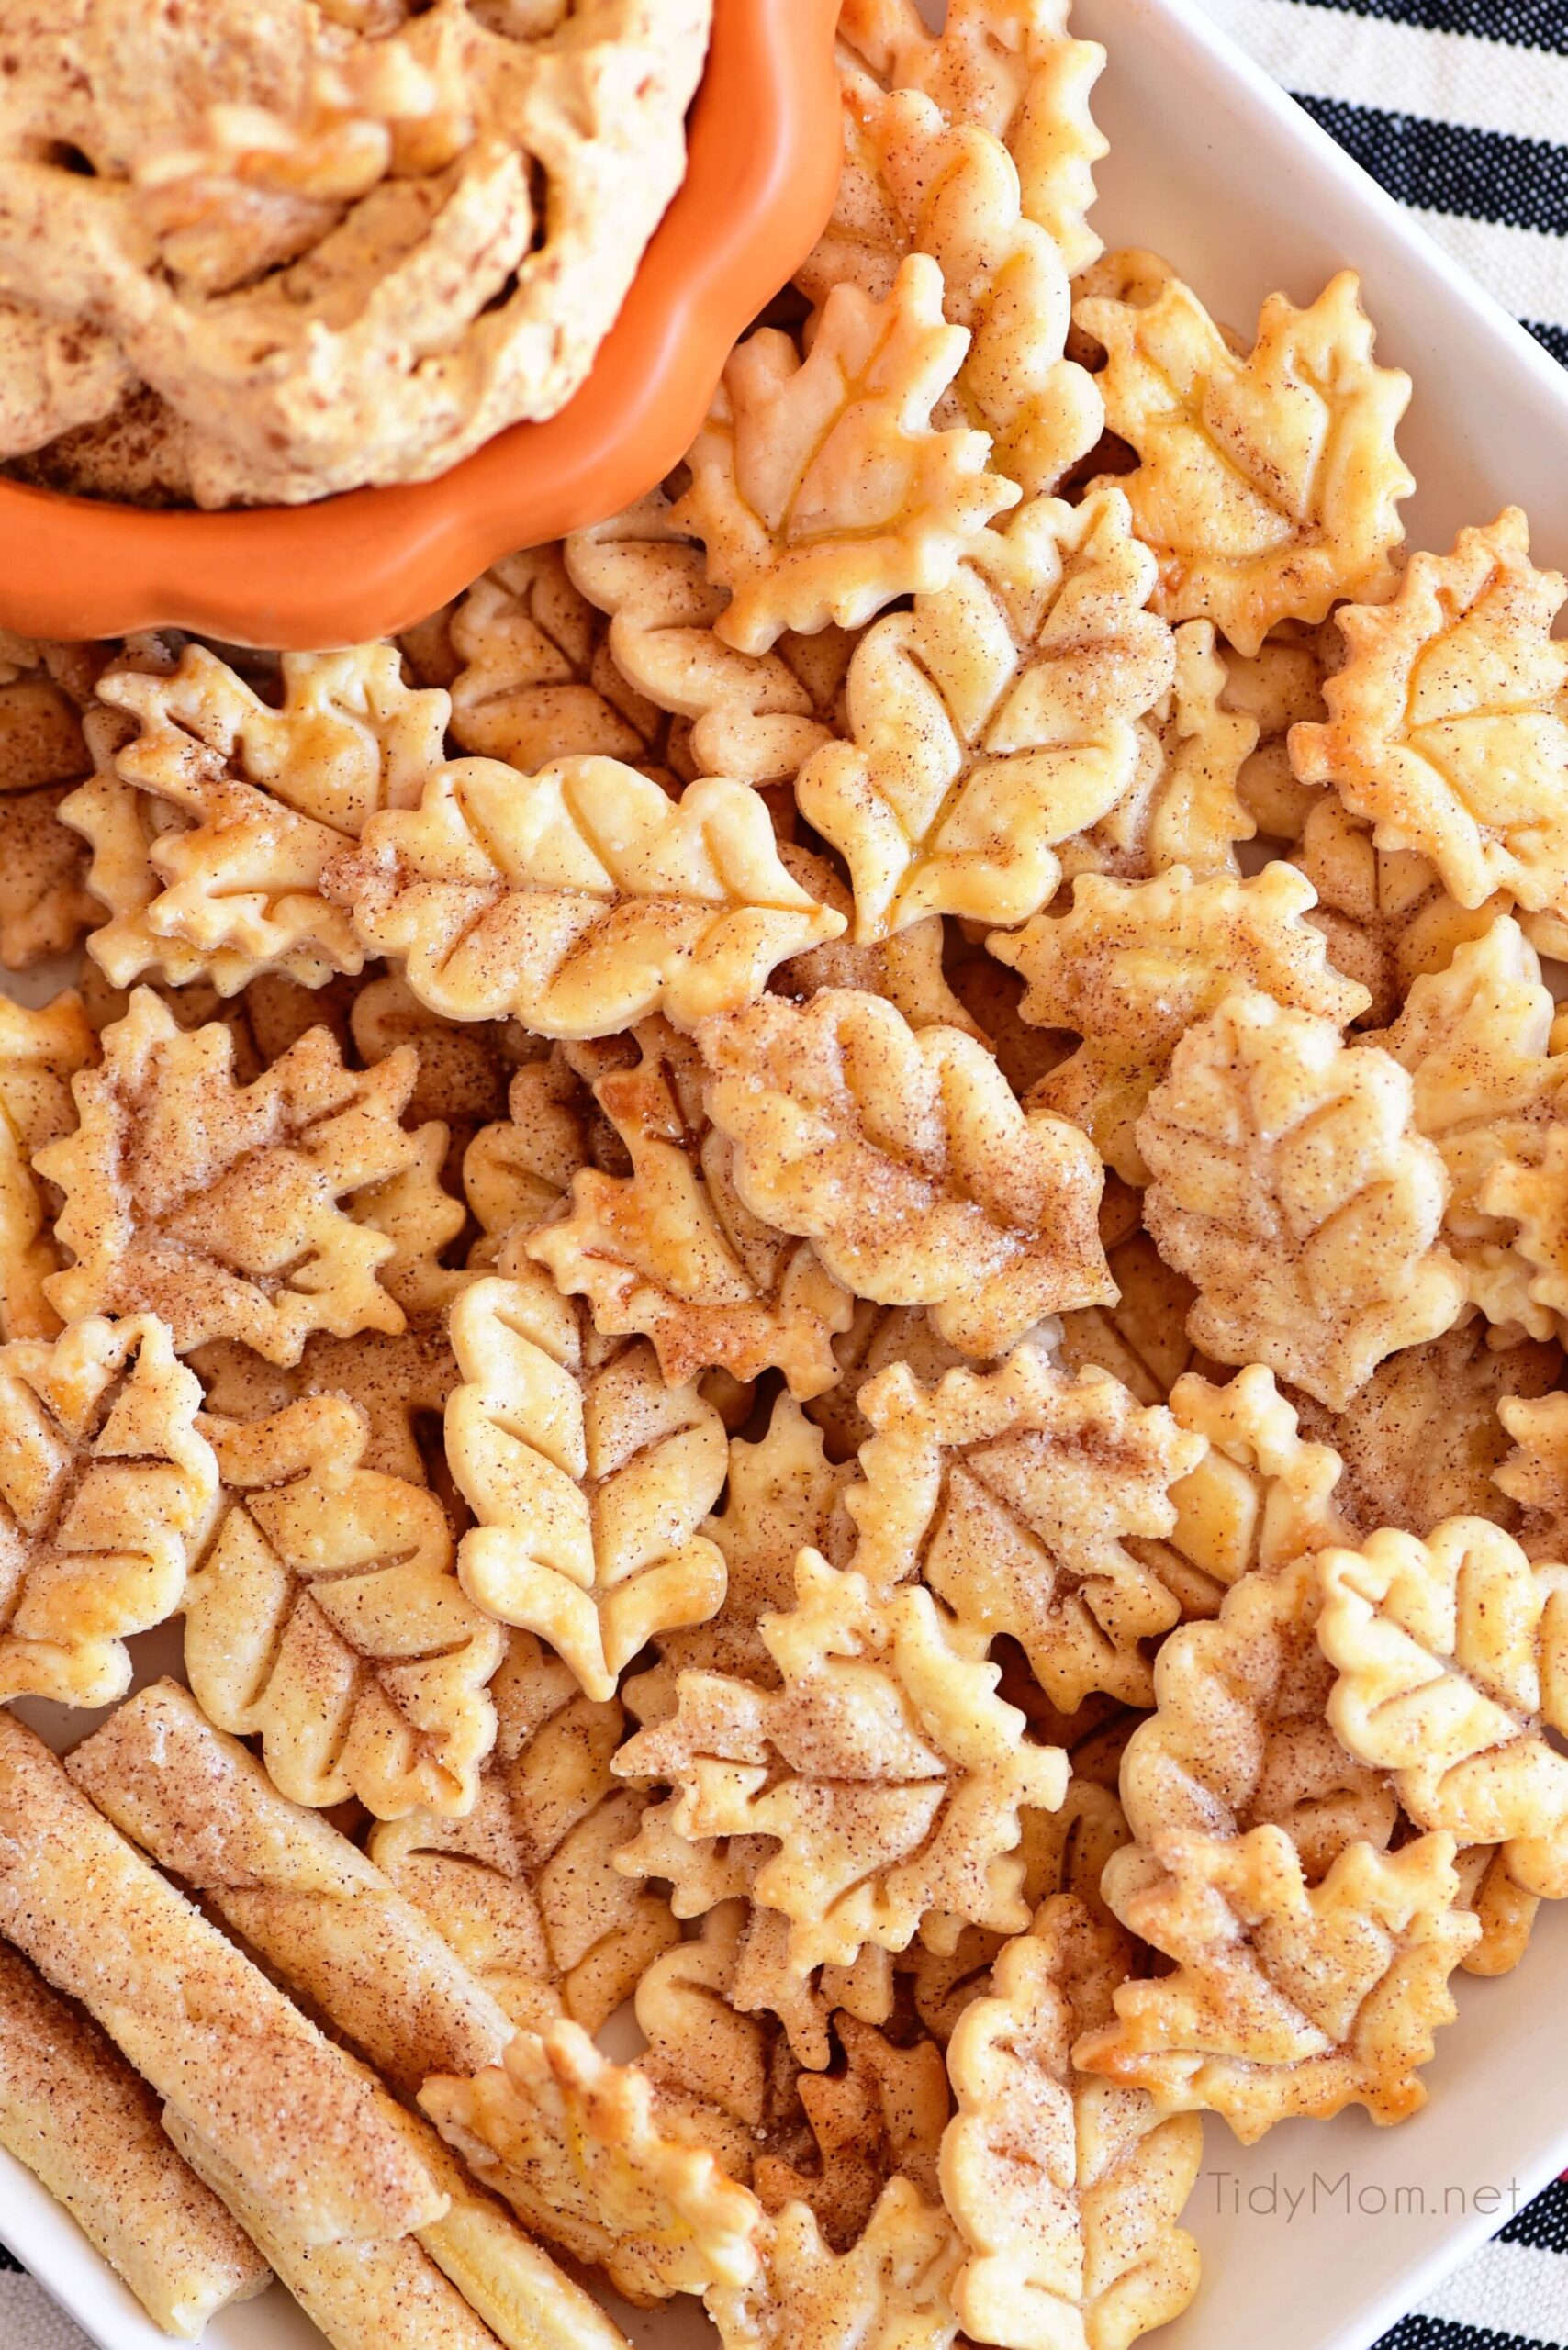 https://tidymom.net/blog/wp-content/uploads/2019/10/pie-crust-cookies-image-scaled.jpg